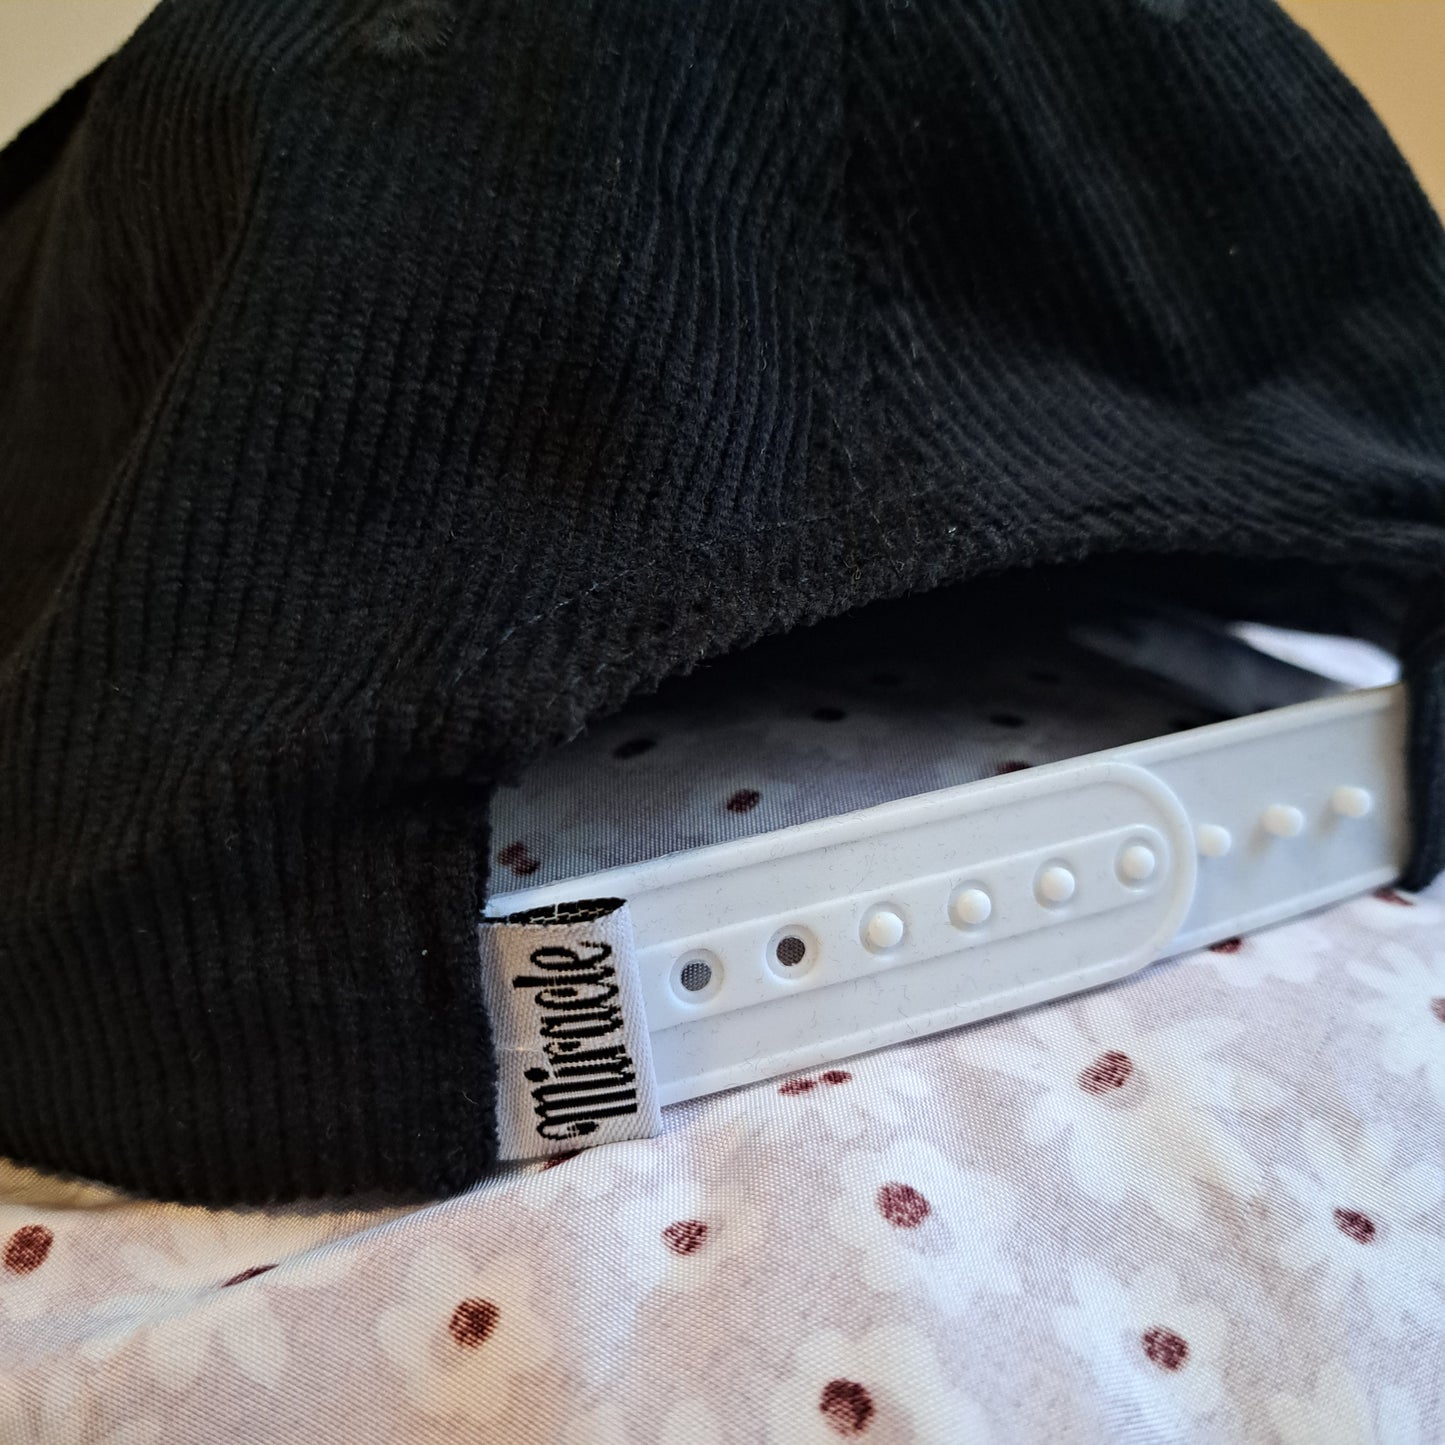 [IN STOCK] HEAT Black Corduroy Hat